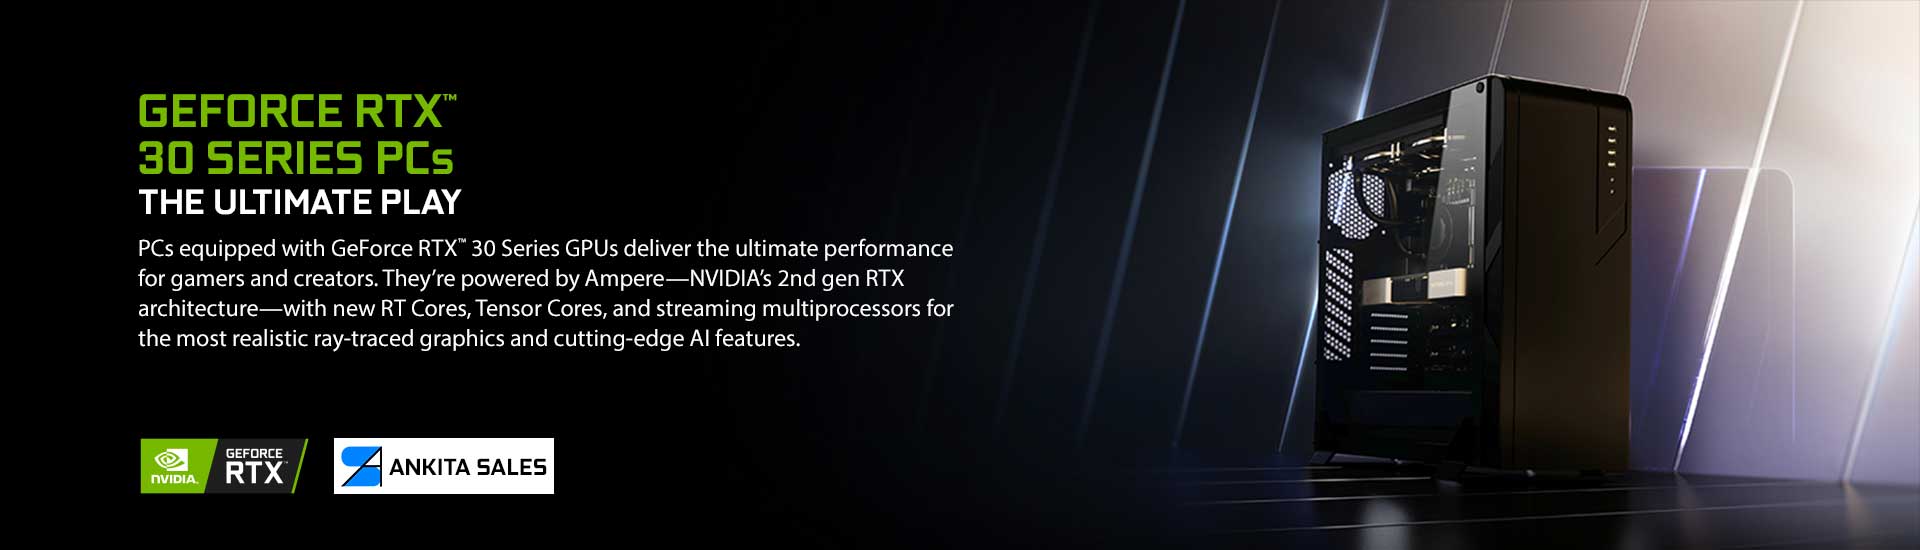 Nvidia GeForce RTX 30 series PCs